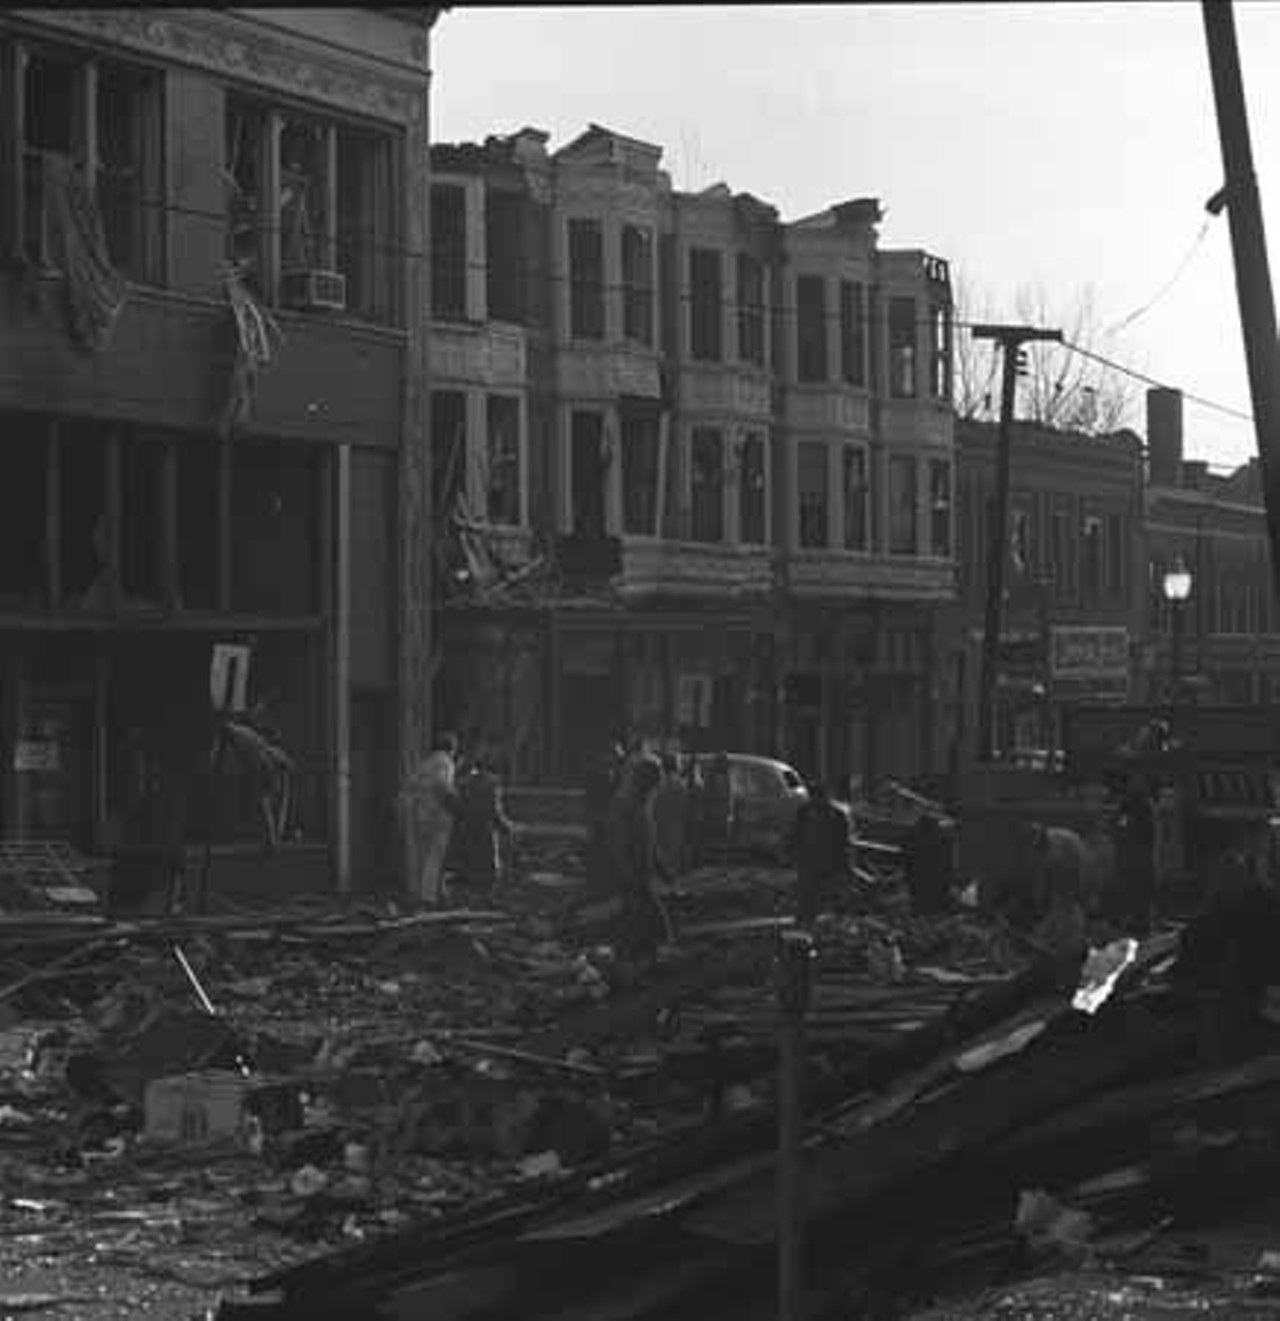 Shocking Photos of the February 1959 Tornado That Tore Through St. Louis